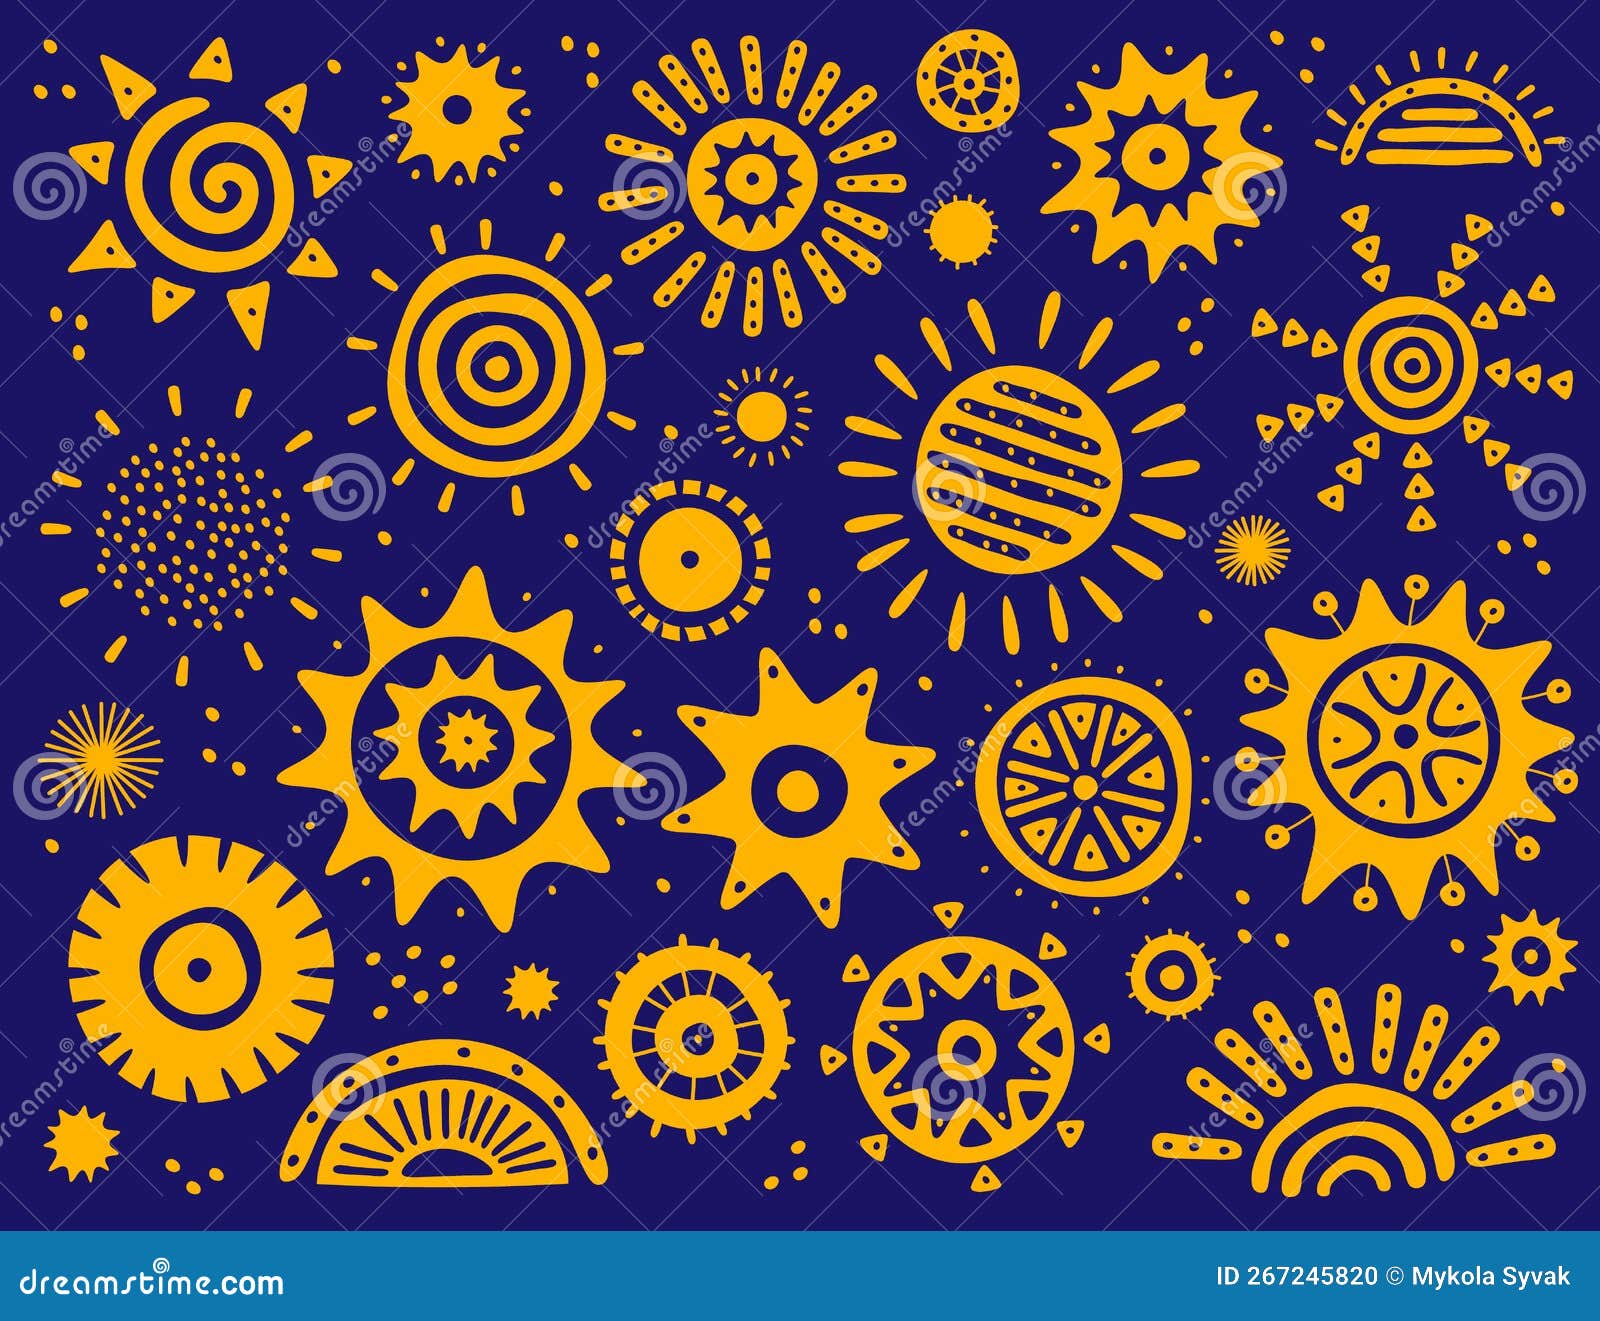 Hand Drawn Illustration Glossy Sun Creative Stock Vector (Royalty Free)  654370732 | Shutterstock